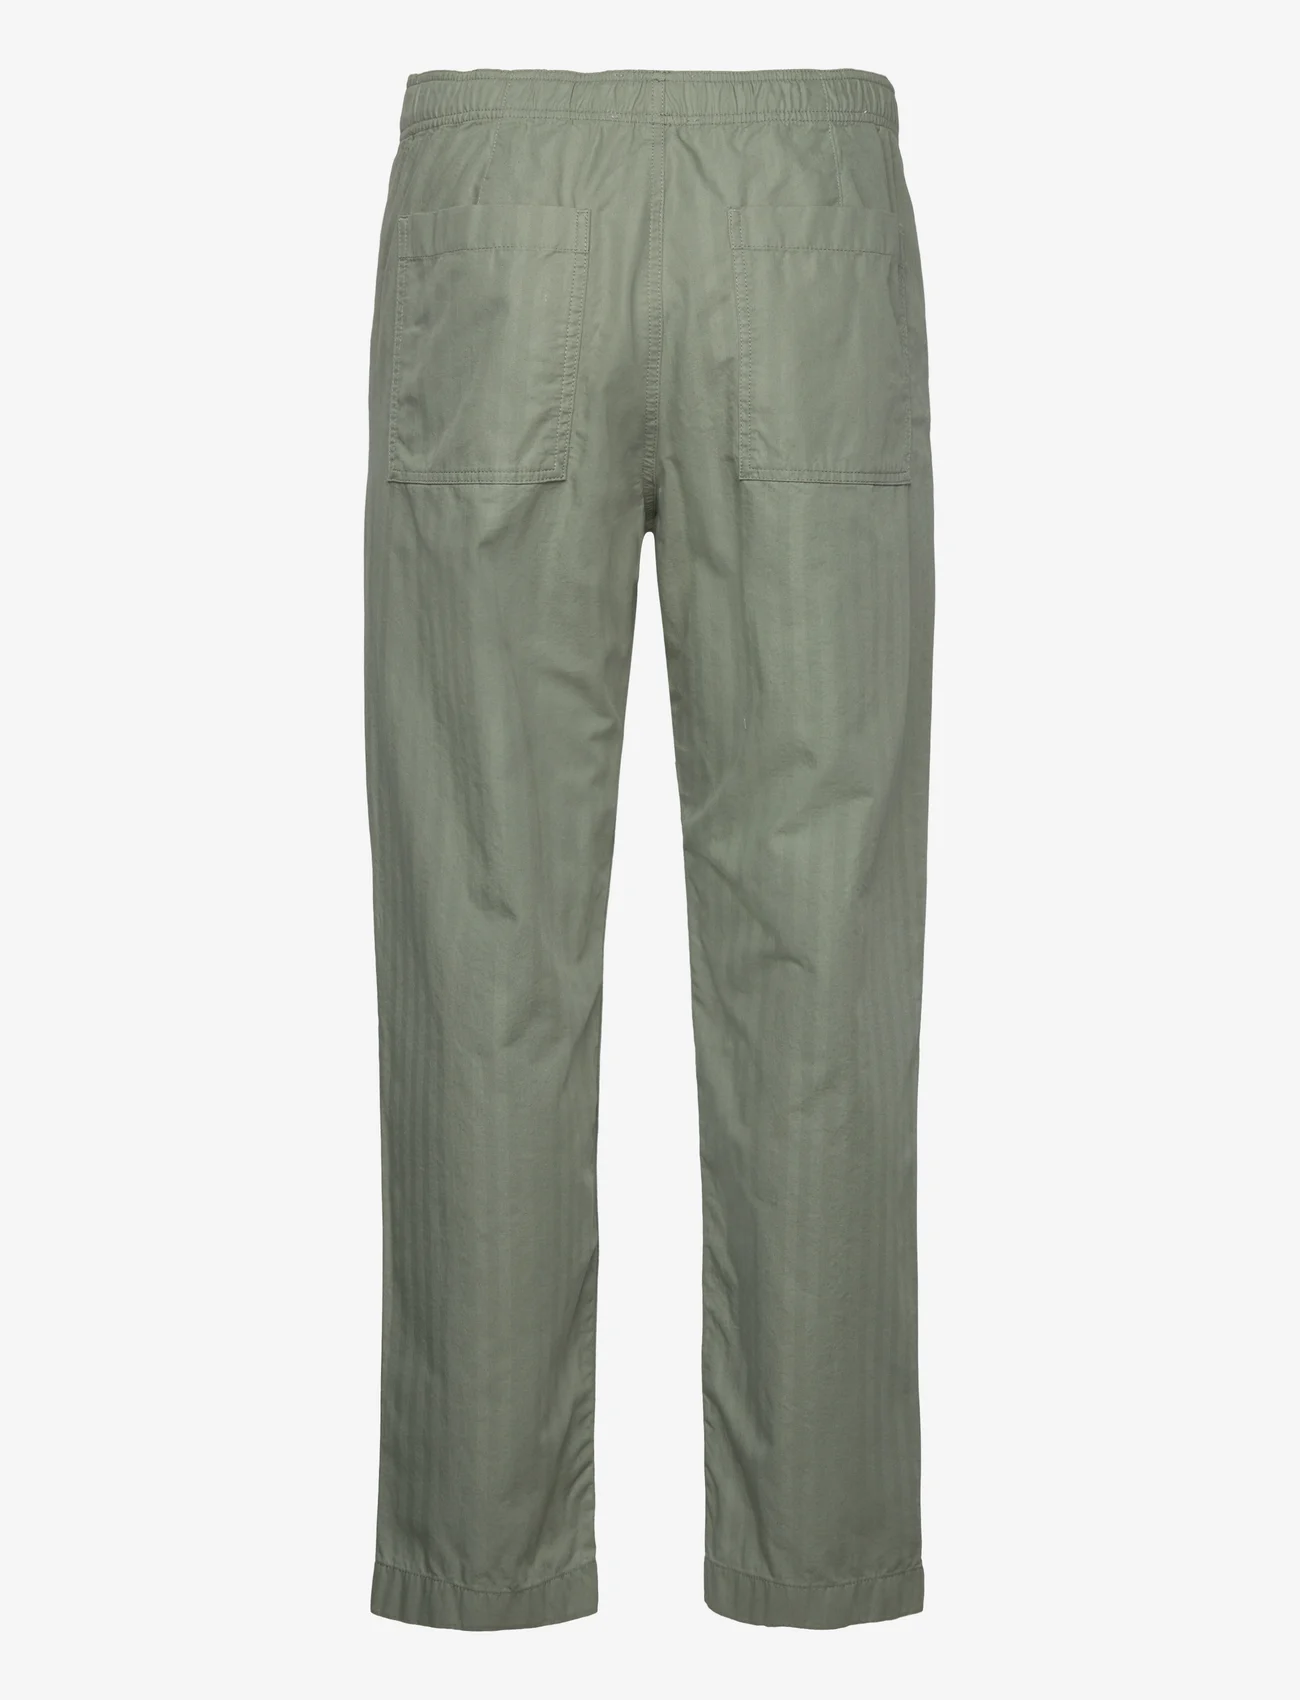 Double A by Wood Wood - Lee herringbone trousers - casual - olive - 1